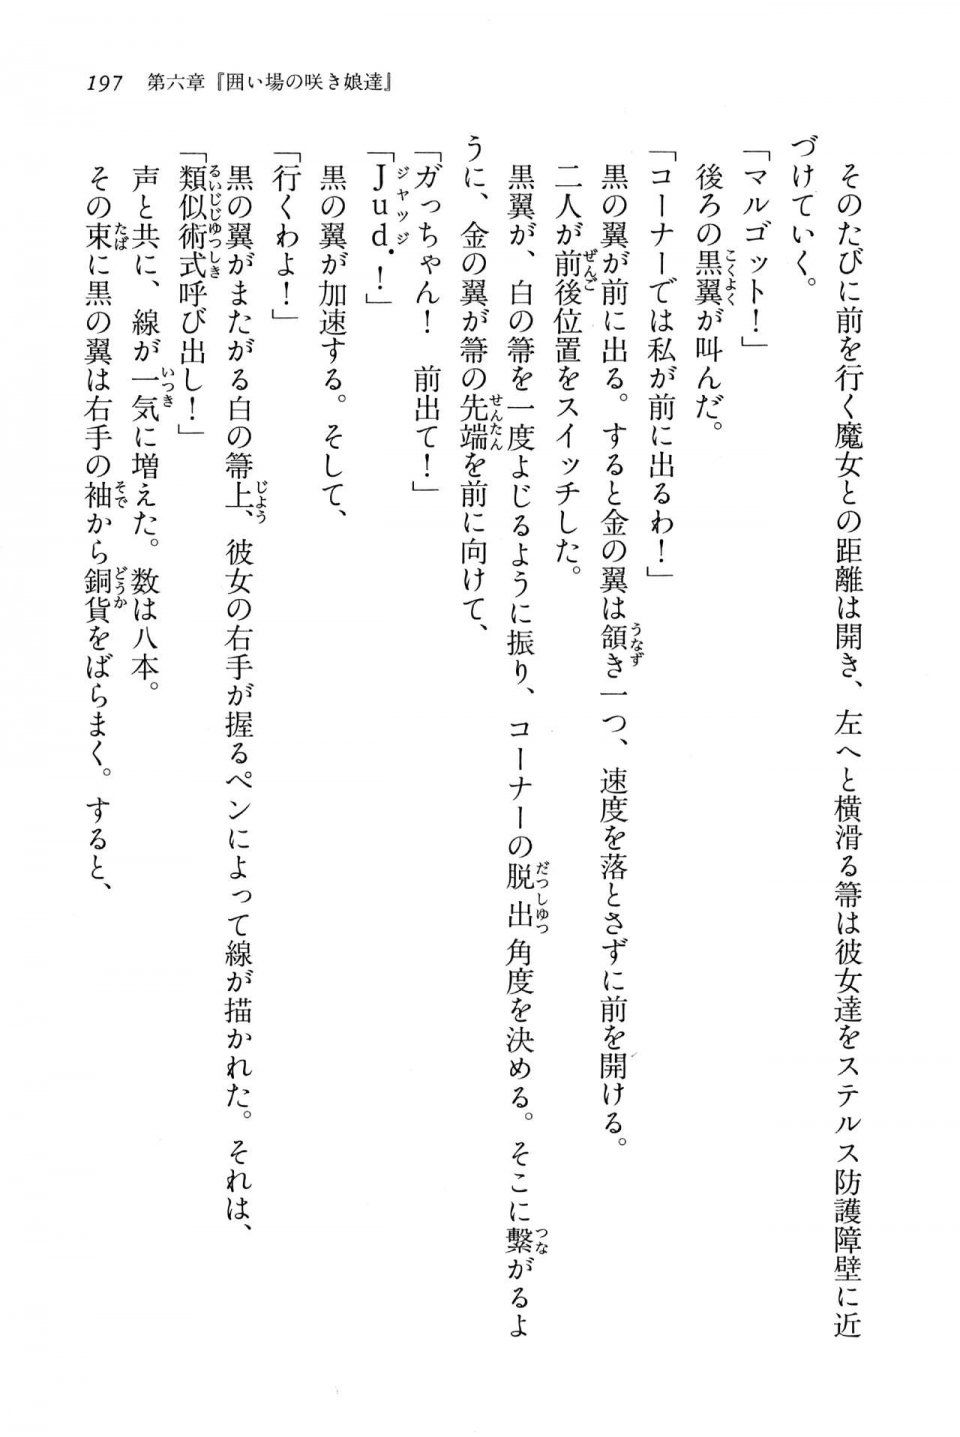 Kyoukai Senjou no Horizon BD Special Mininovel Vol 7(4A) - Photo #201